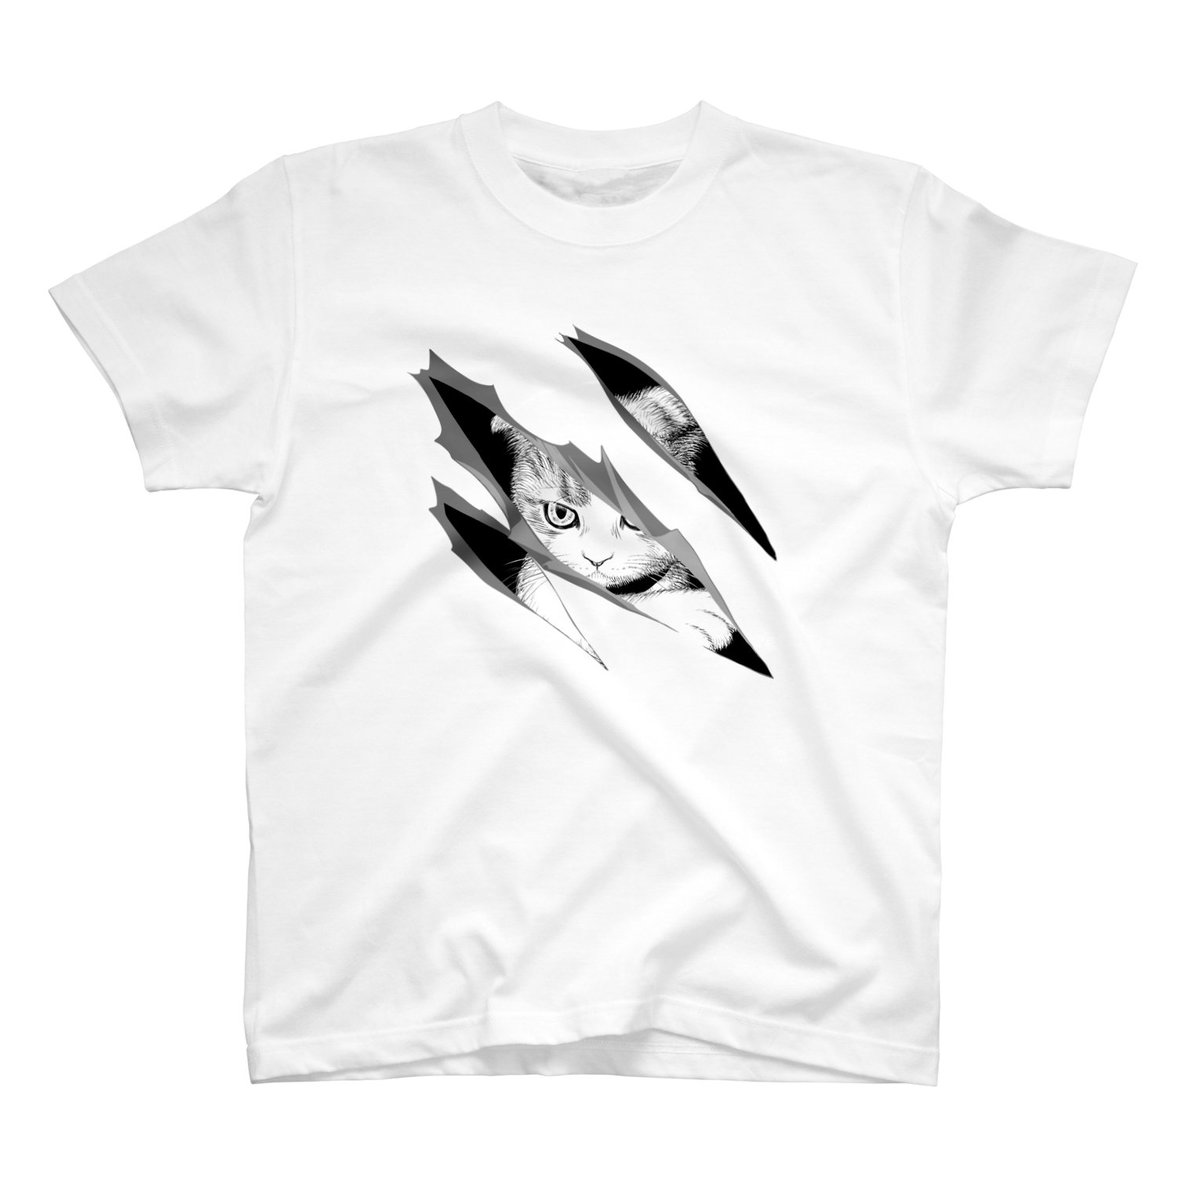 #SUZURIのTシャツセール Tシャツ1点につき1,000円引きは8月10日（火）まで！ ￼ セール会場はこちら￼ suzuri.jp/on_sale?utm_so… nya-mewのアイテムもよろしくね suzuri.jp/nya-mew